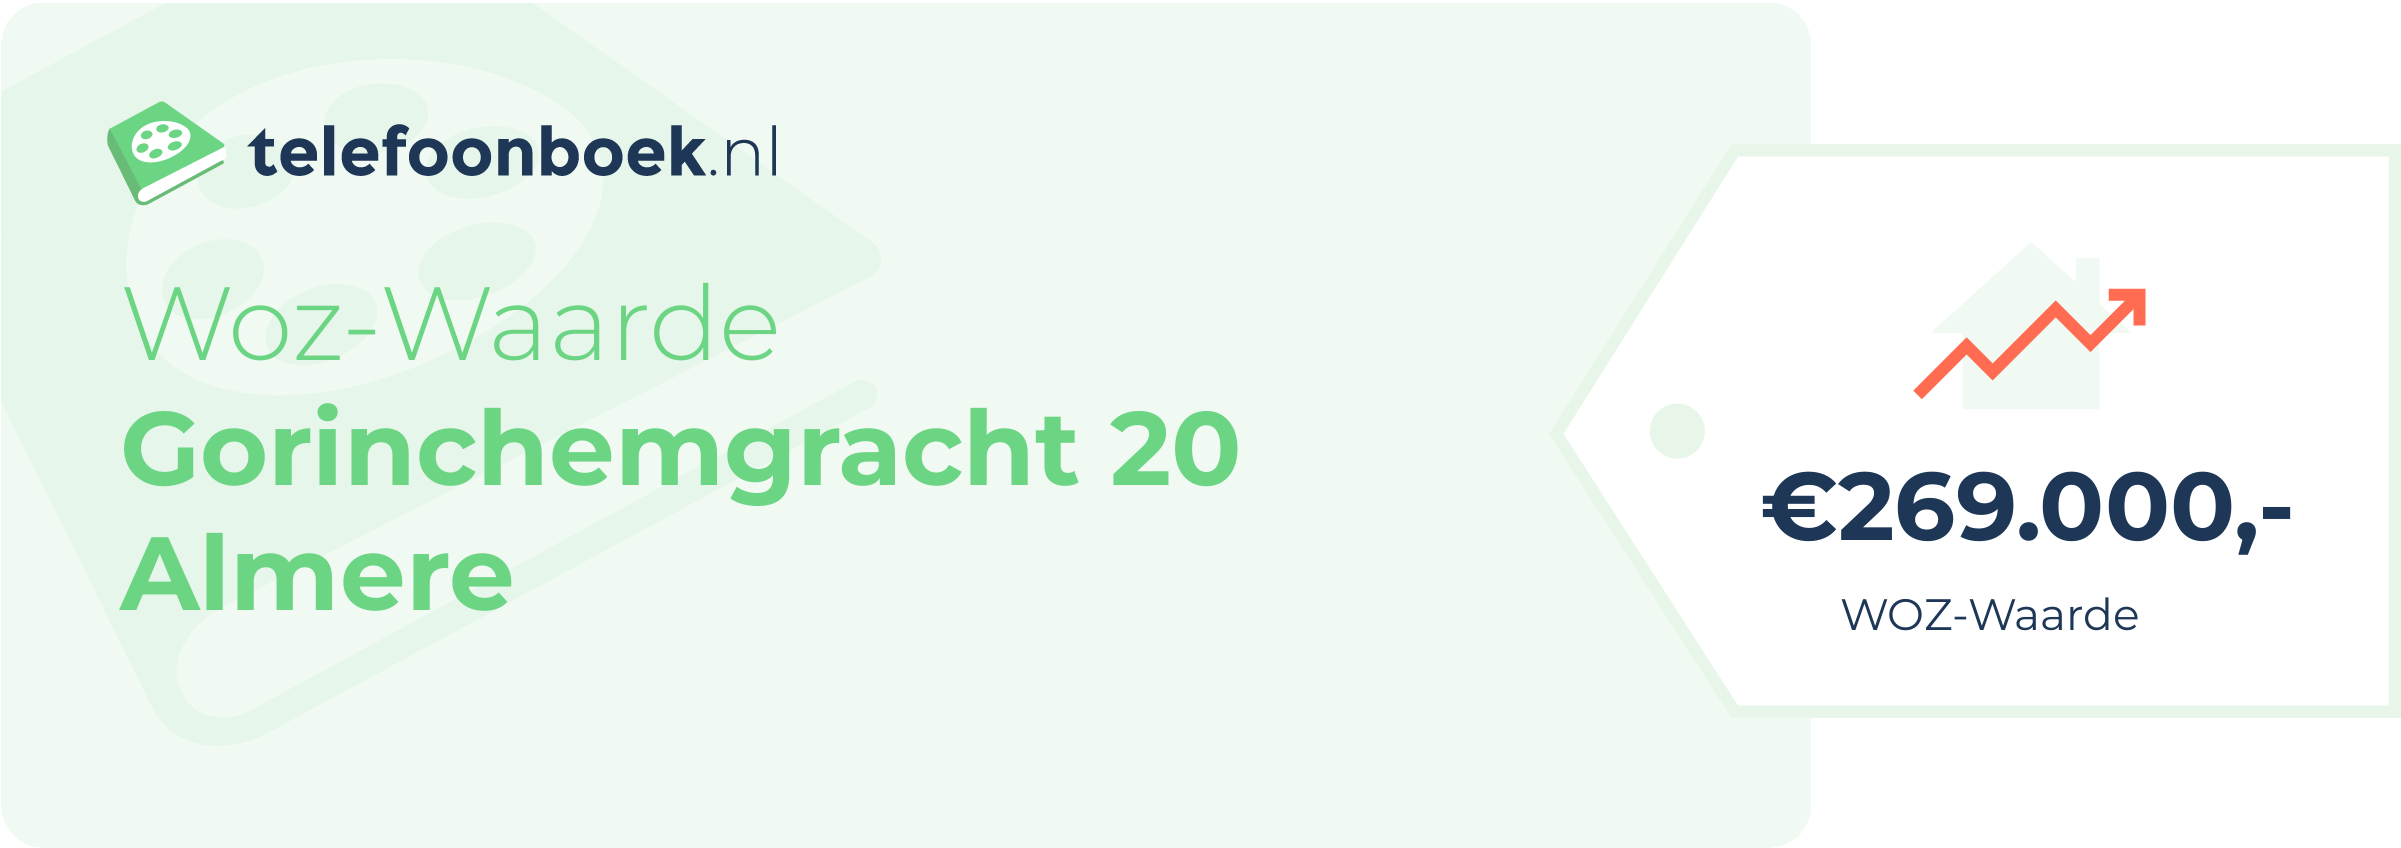 WOZ-waarde Gorinchemgracht 20 Almere